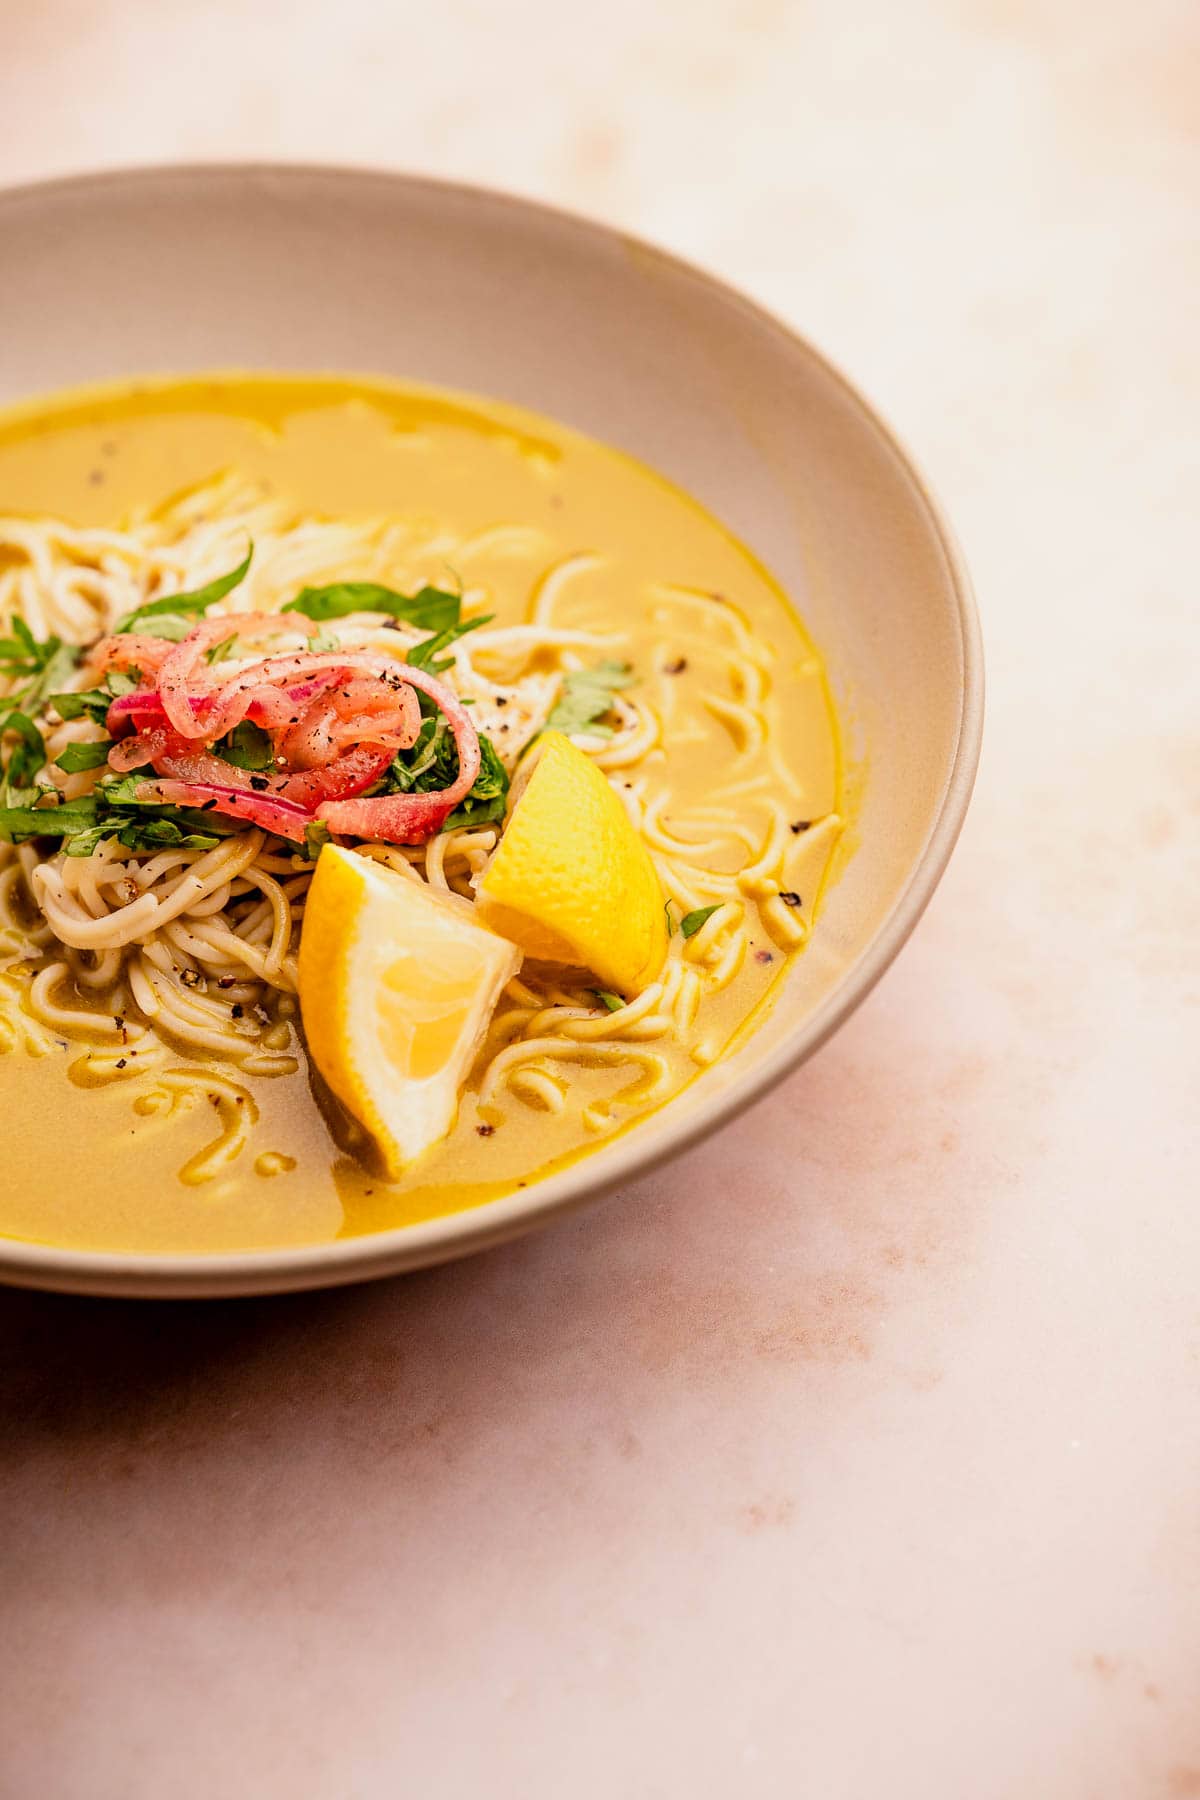 A bowl of golden noodle soup on a table.